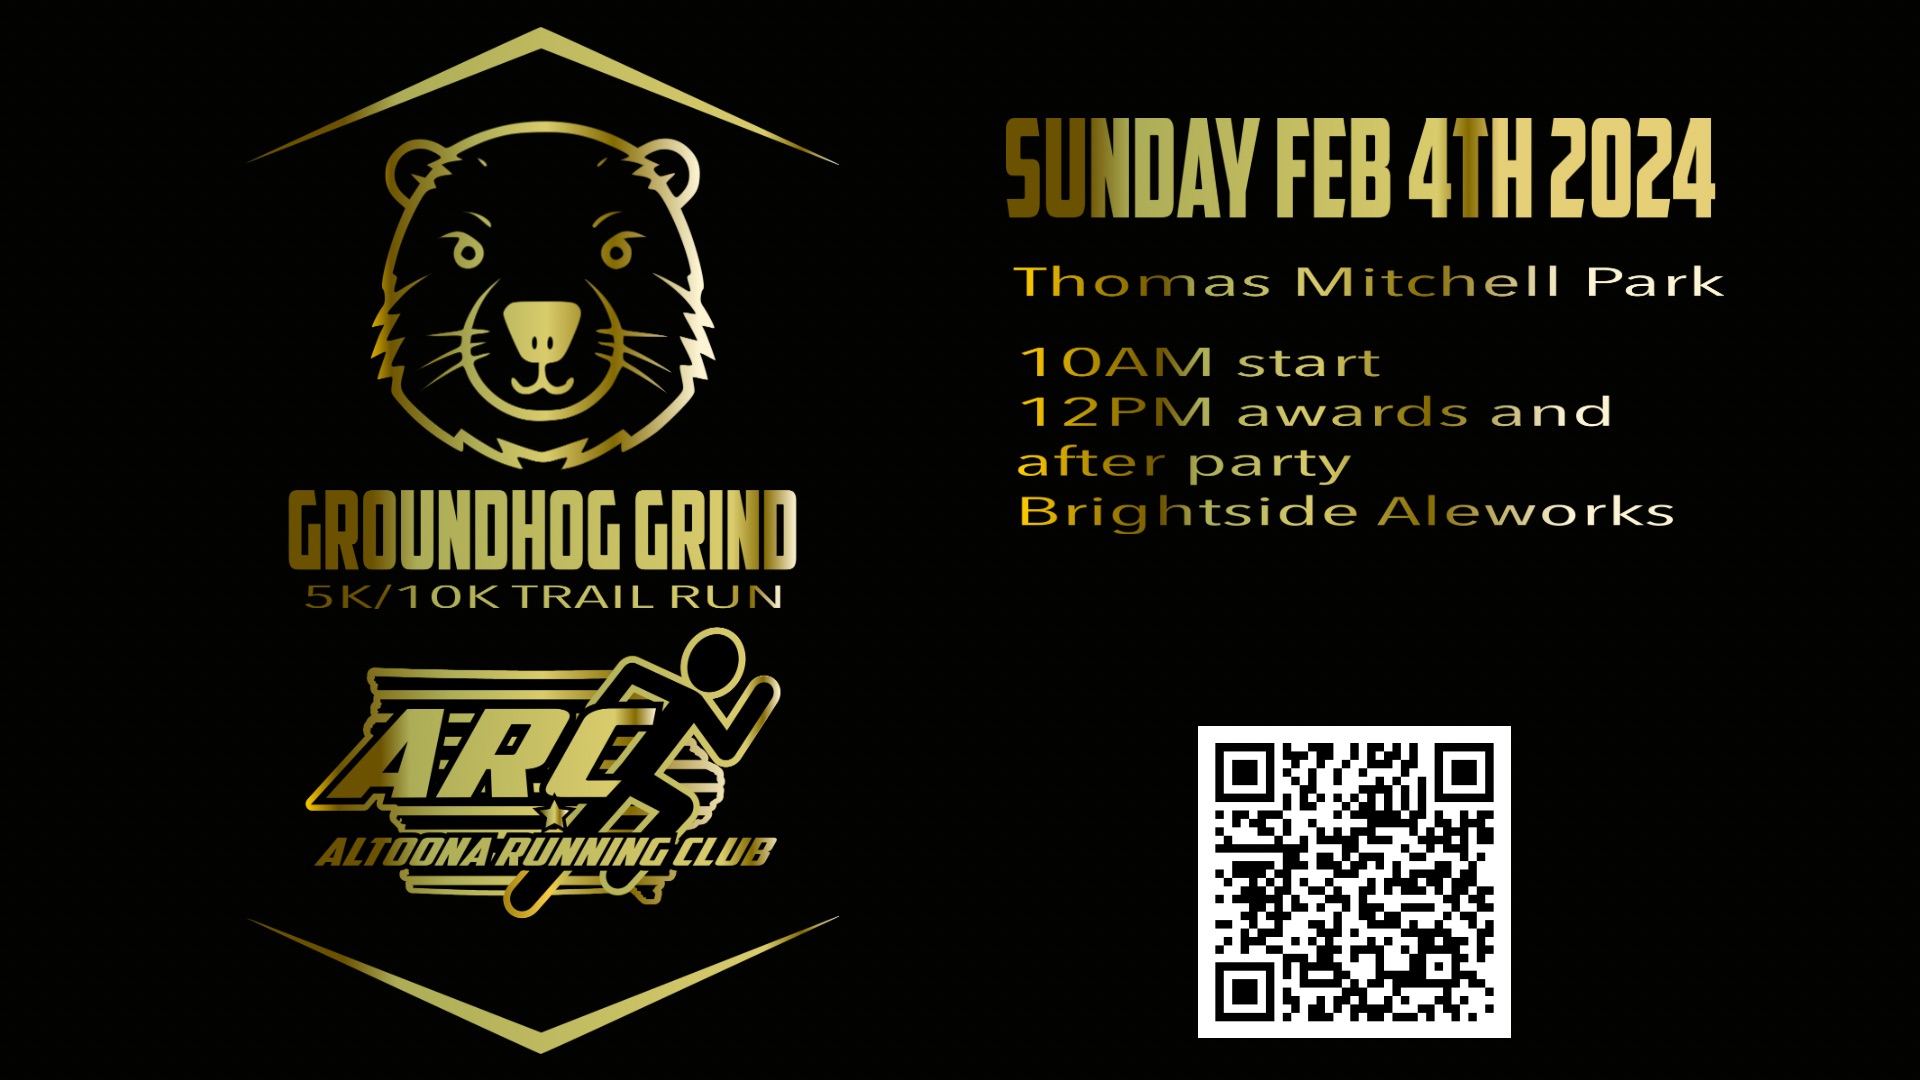 The Groundhog Grind 5K/10K: Feb 6th at Thomas Mitchell Park - Visit Altoona